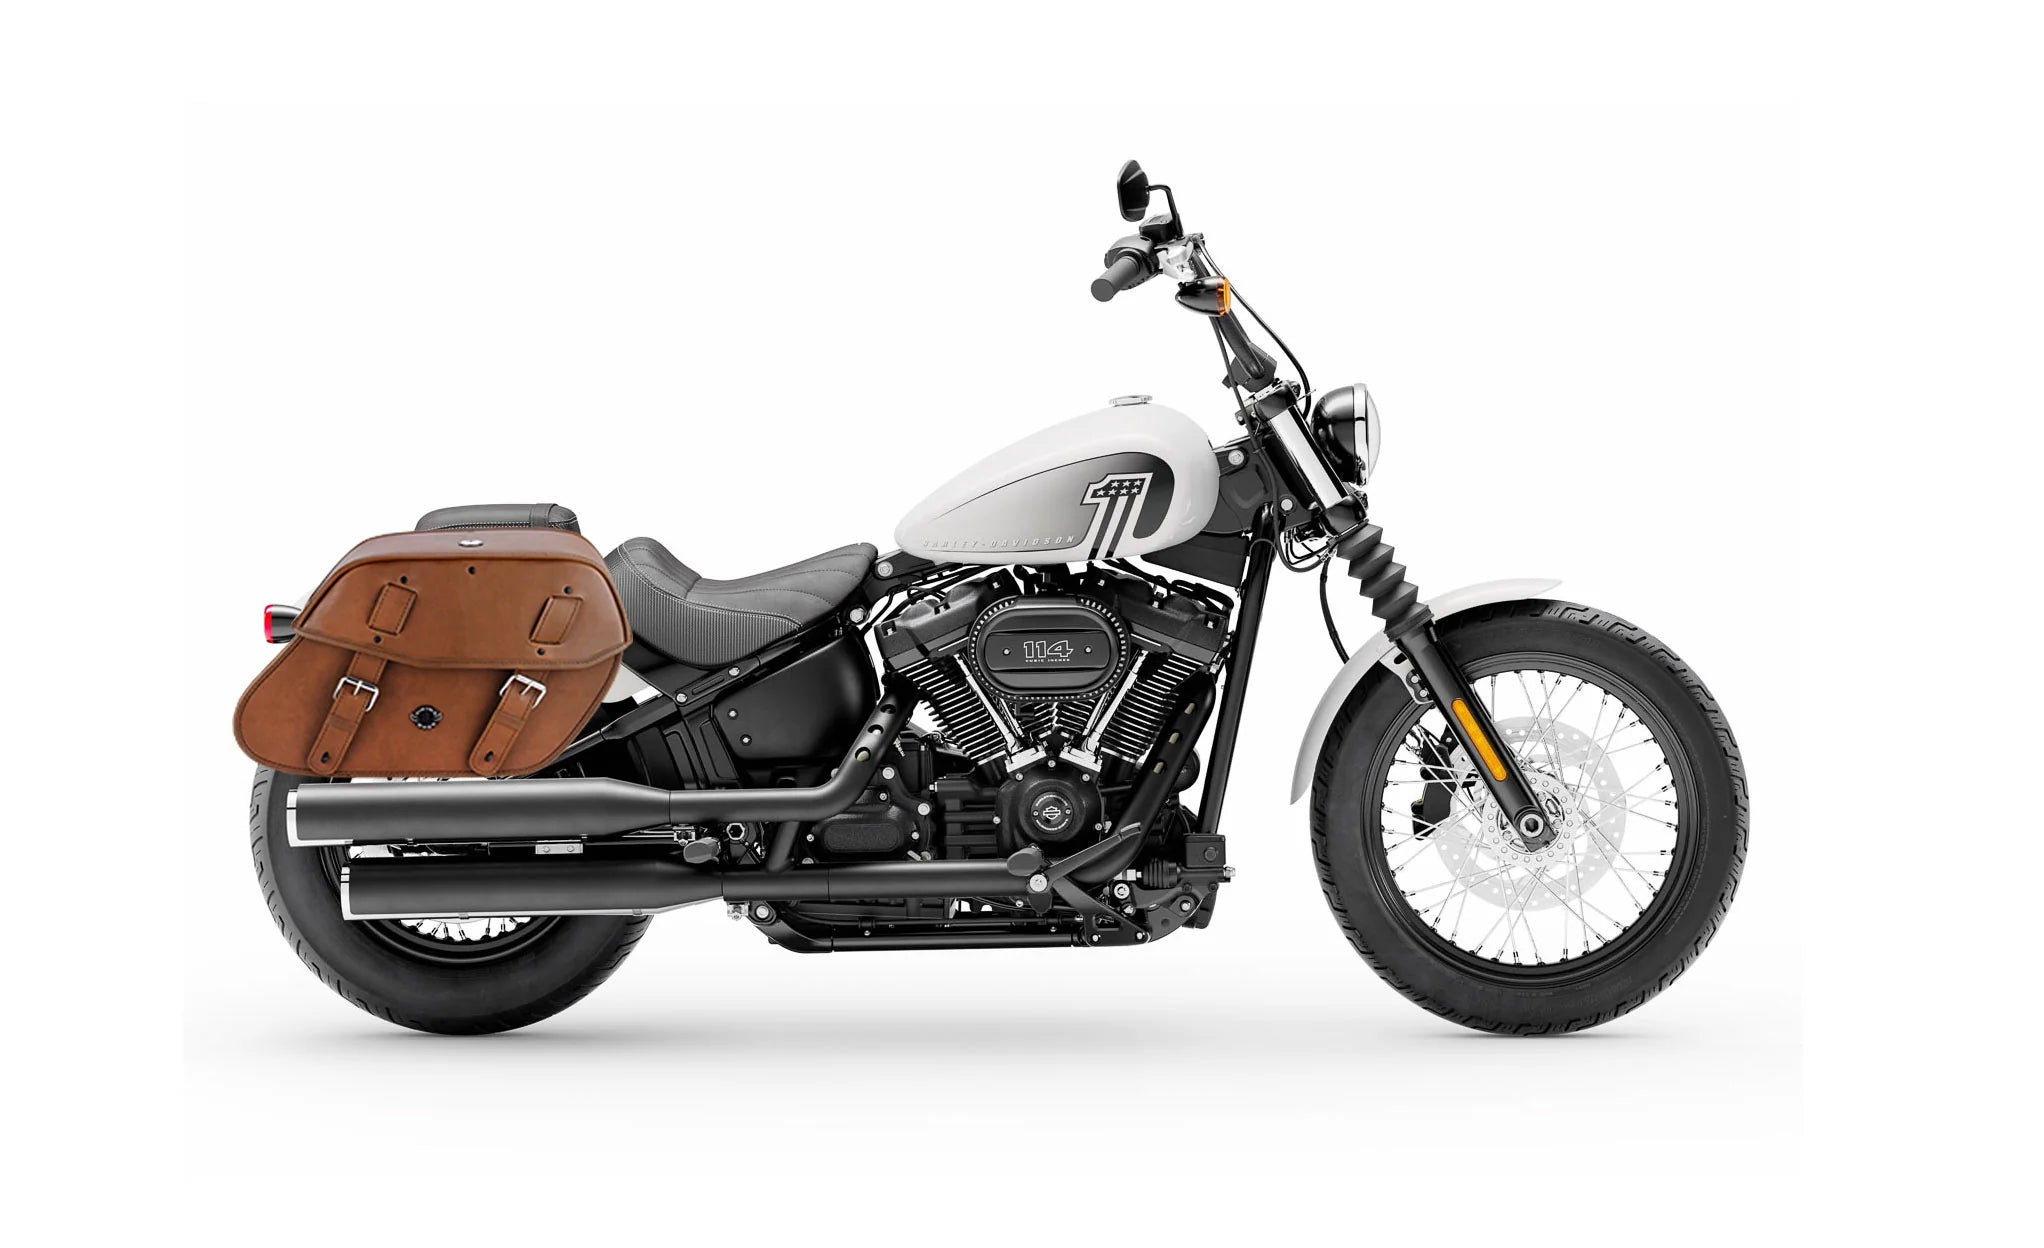 Viking Odin Brown Large Leather Motorcycle Saddlebags For Harley Softail Street Bob Fxbb on Bike Photo @expand